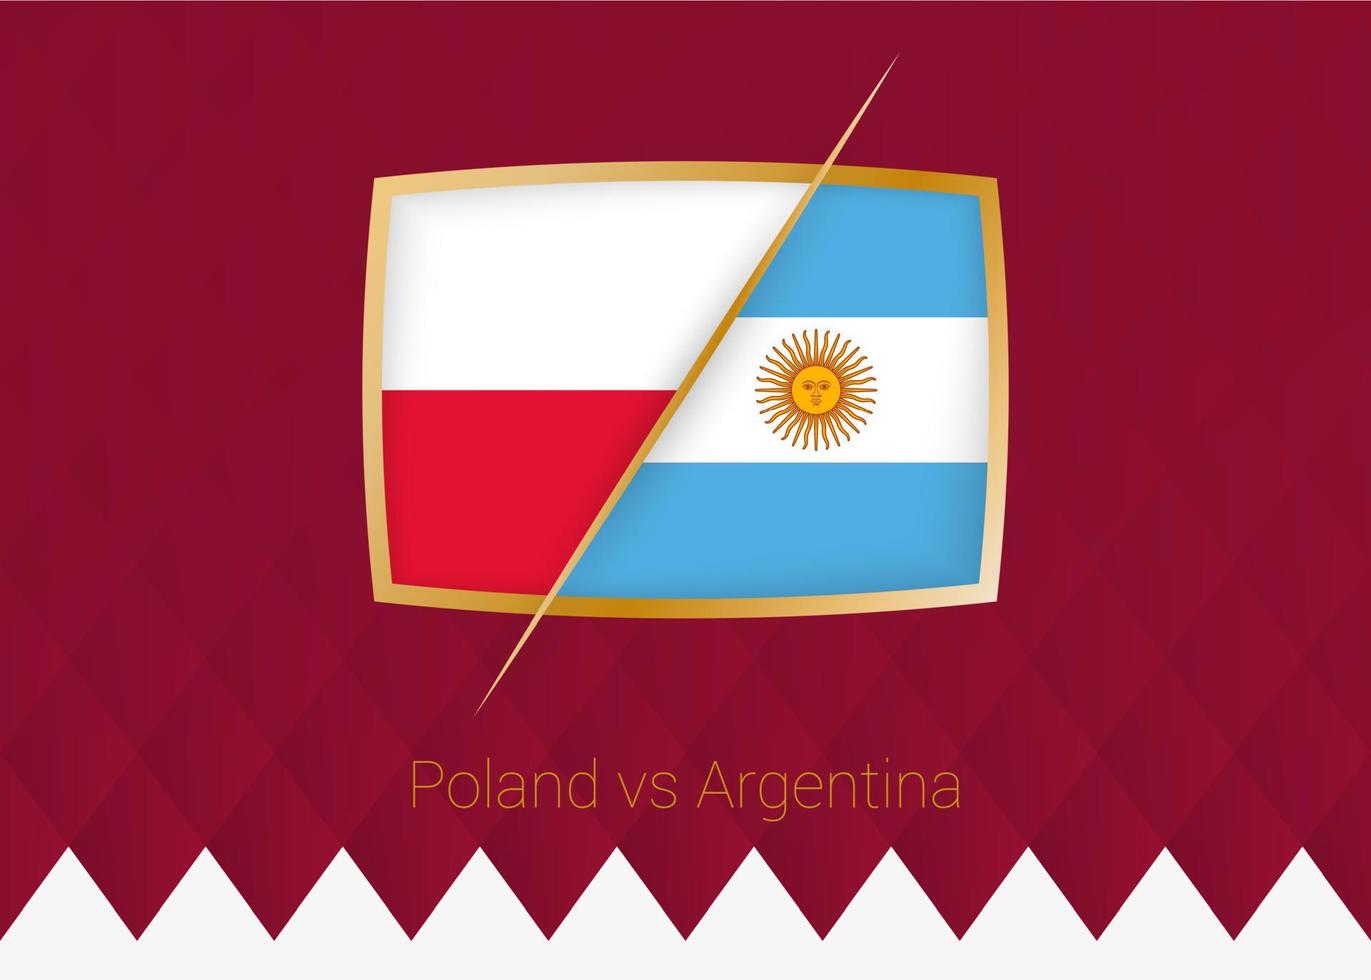 polen mot argentina, grupp skede ikon av fotboll konkurrens på vinröd bakgrund. vektor